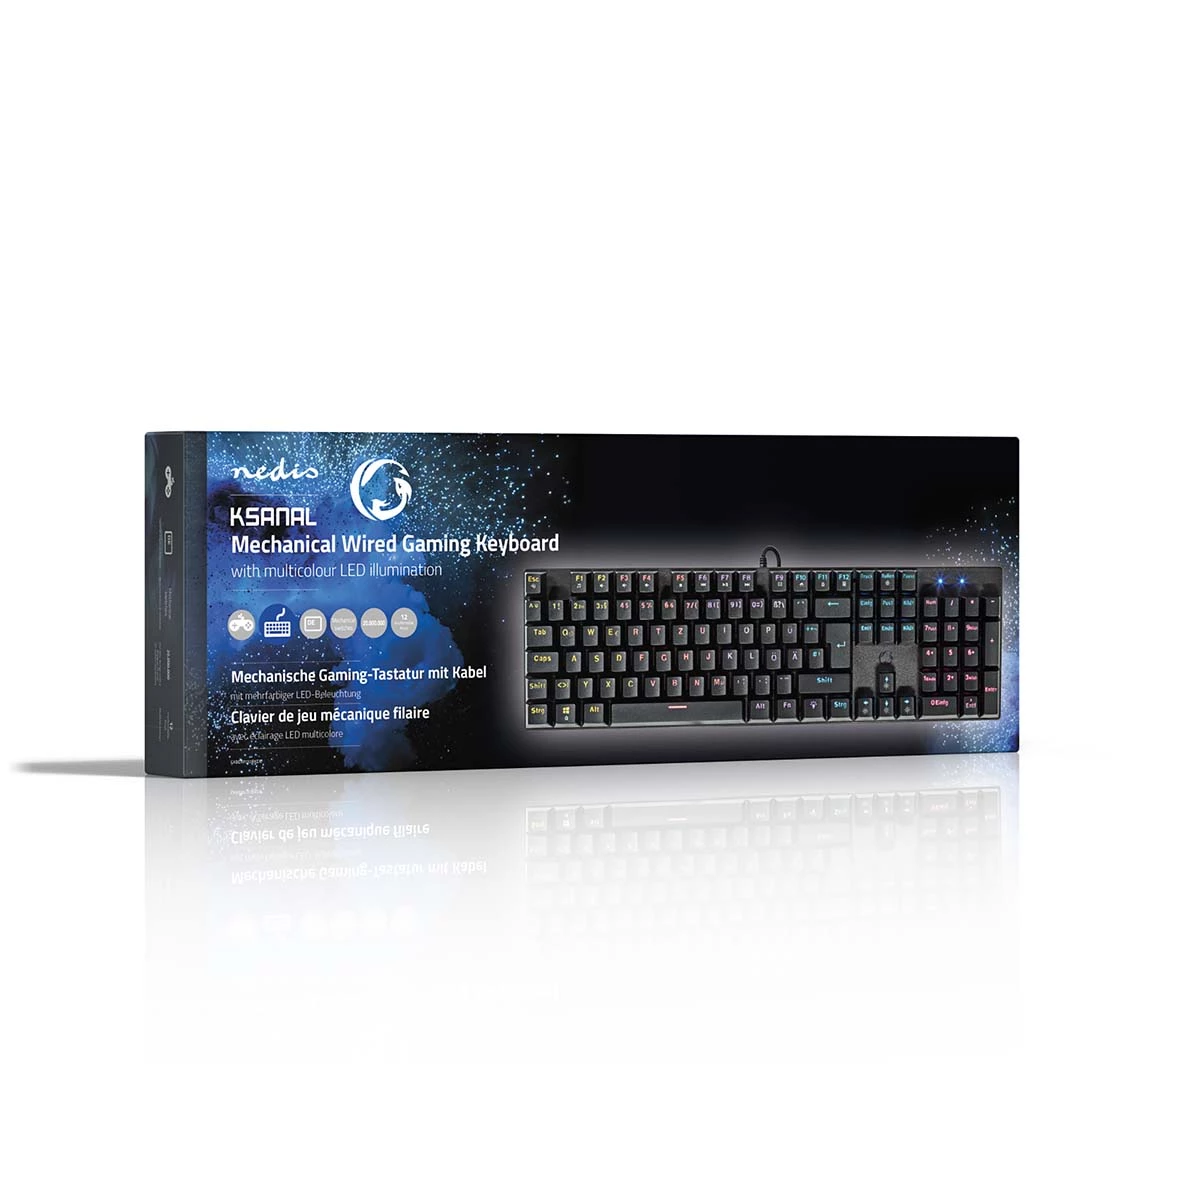 Wired Gaming Keyboard